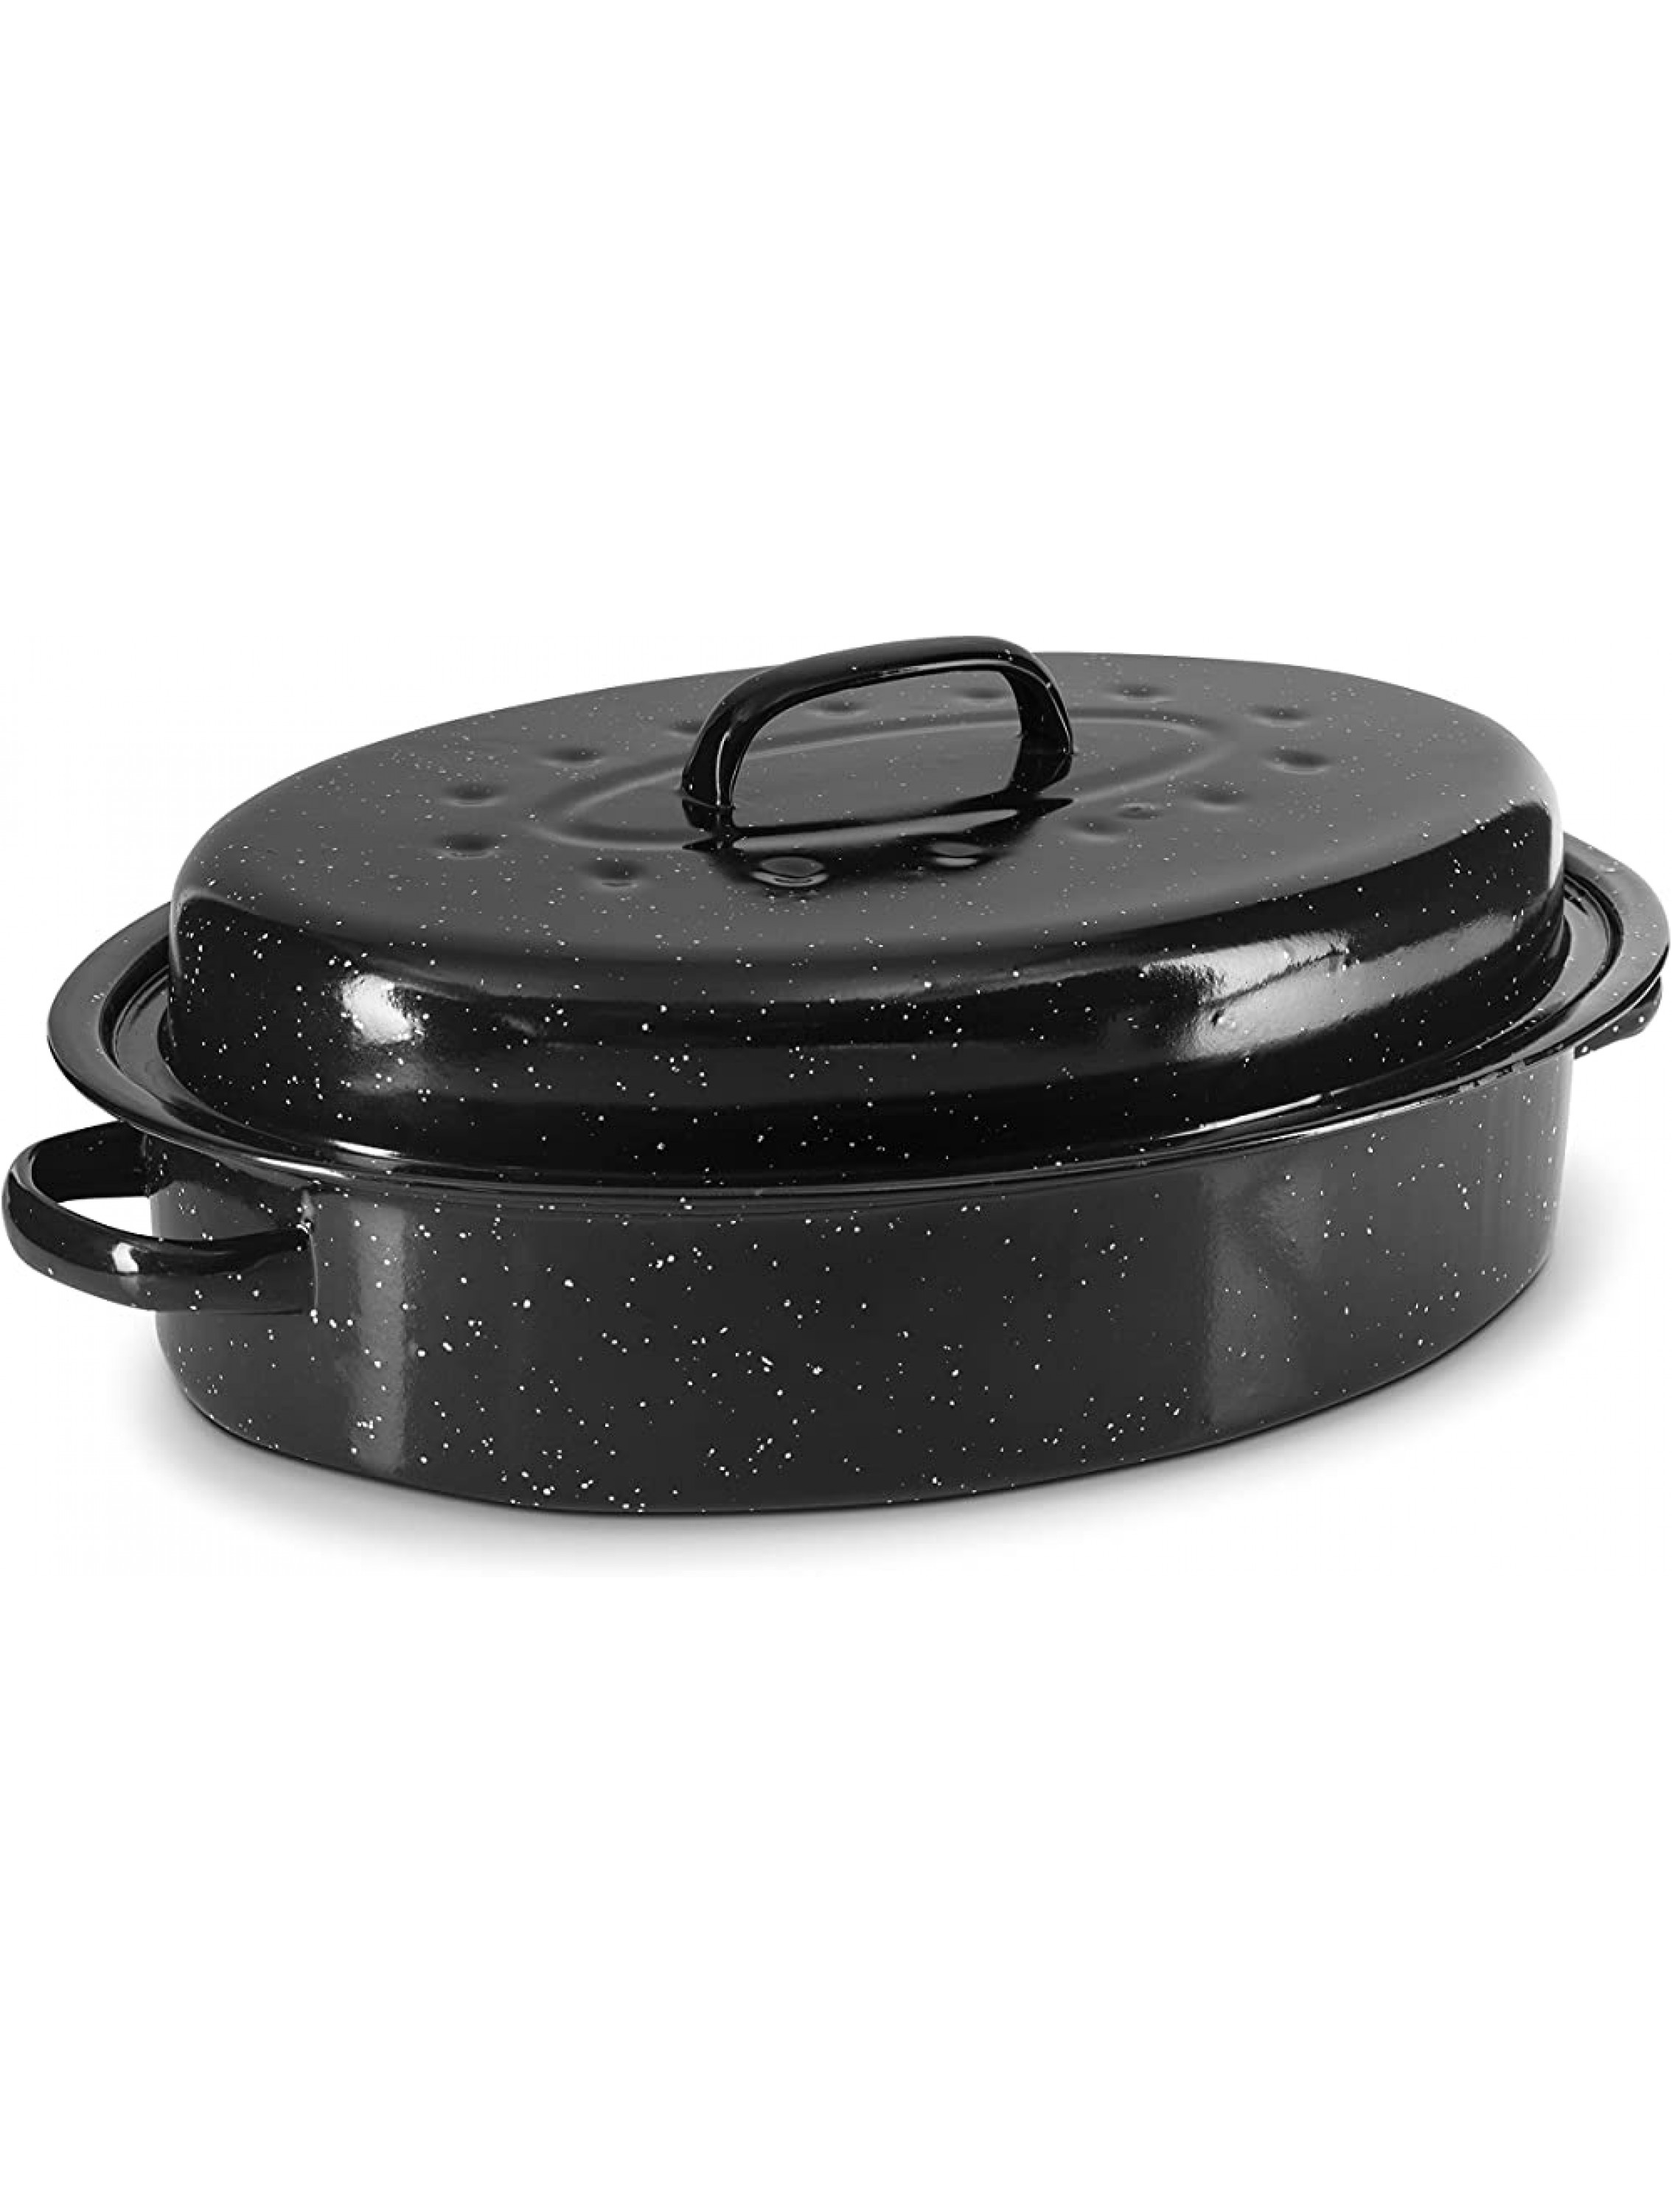 Eternal Living Granite Roasting Pans Black 15 Oval Roaster Pan With Lid - BG81QQE8I